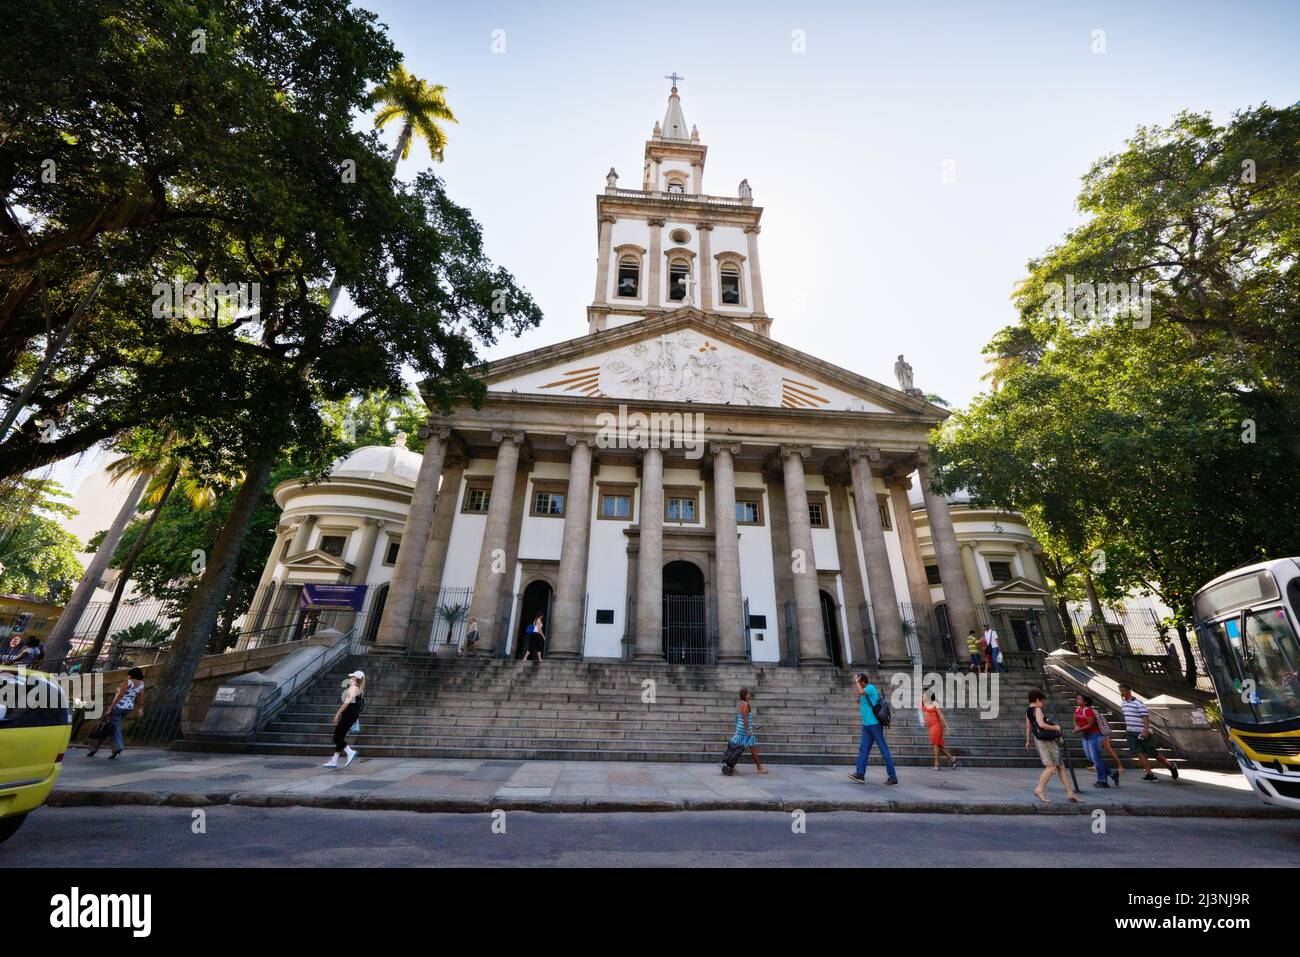 Sight-seeing in Rio. Shot of an historic church in Rio de Janeiro. Stock Photo